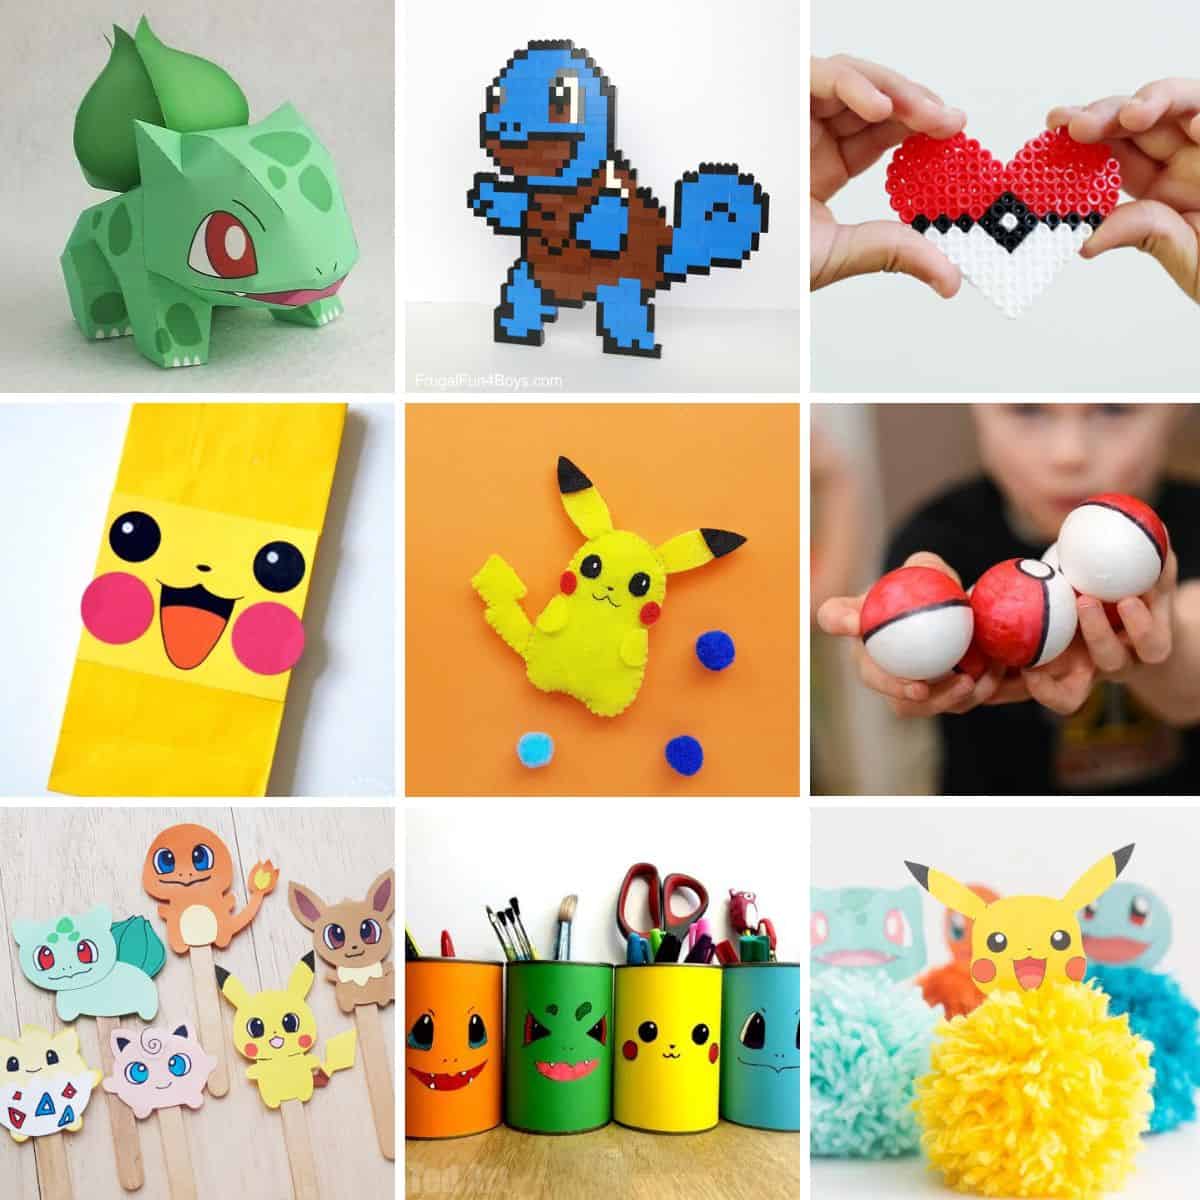 Nature inspired Pokemon crafts - you gotta make 'em all! - Mother Natured